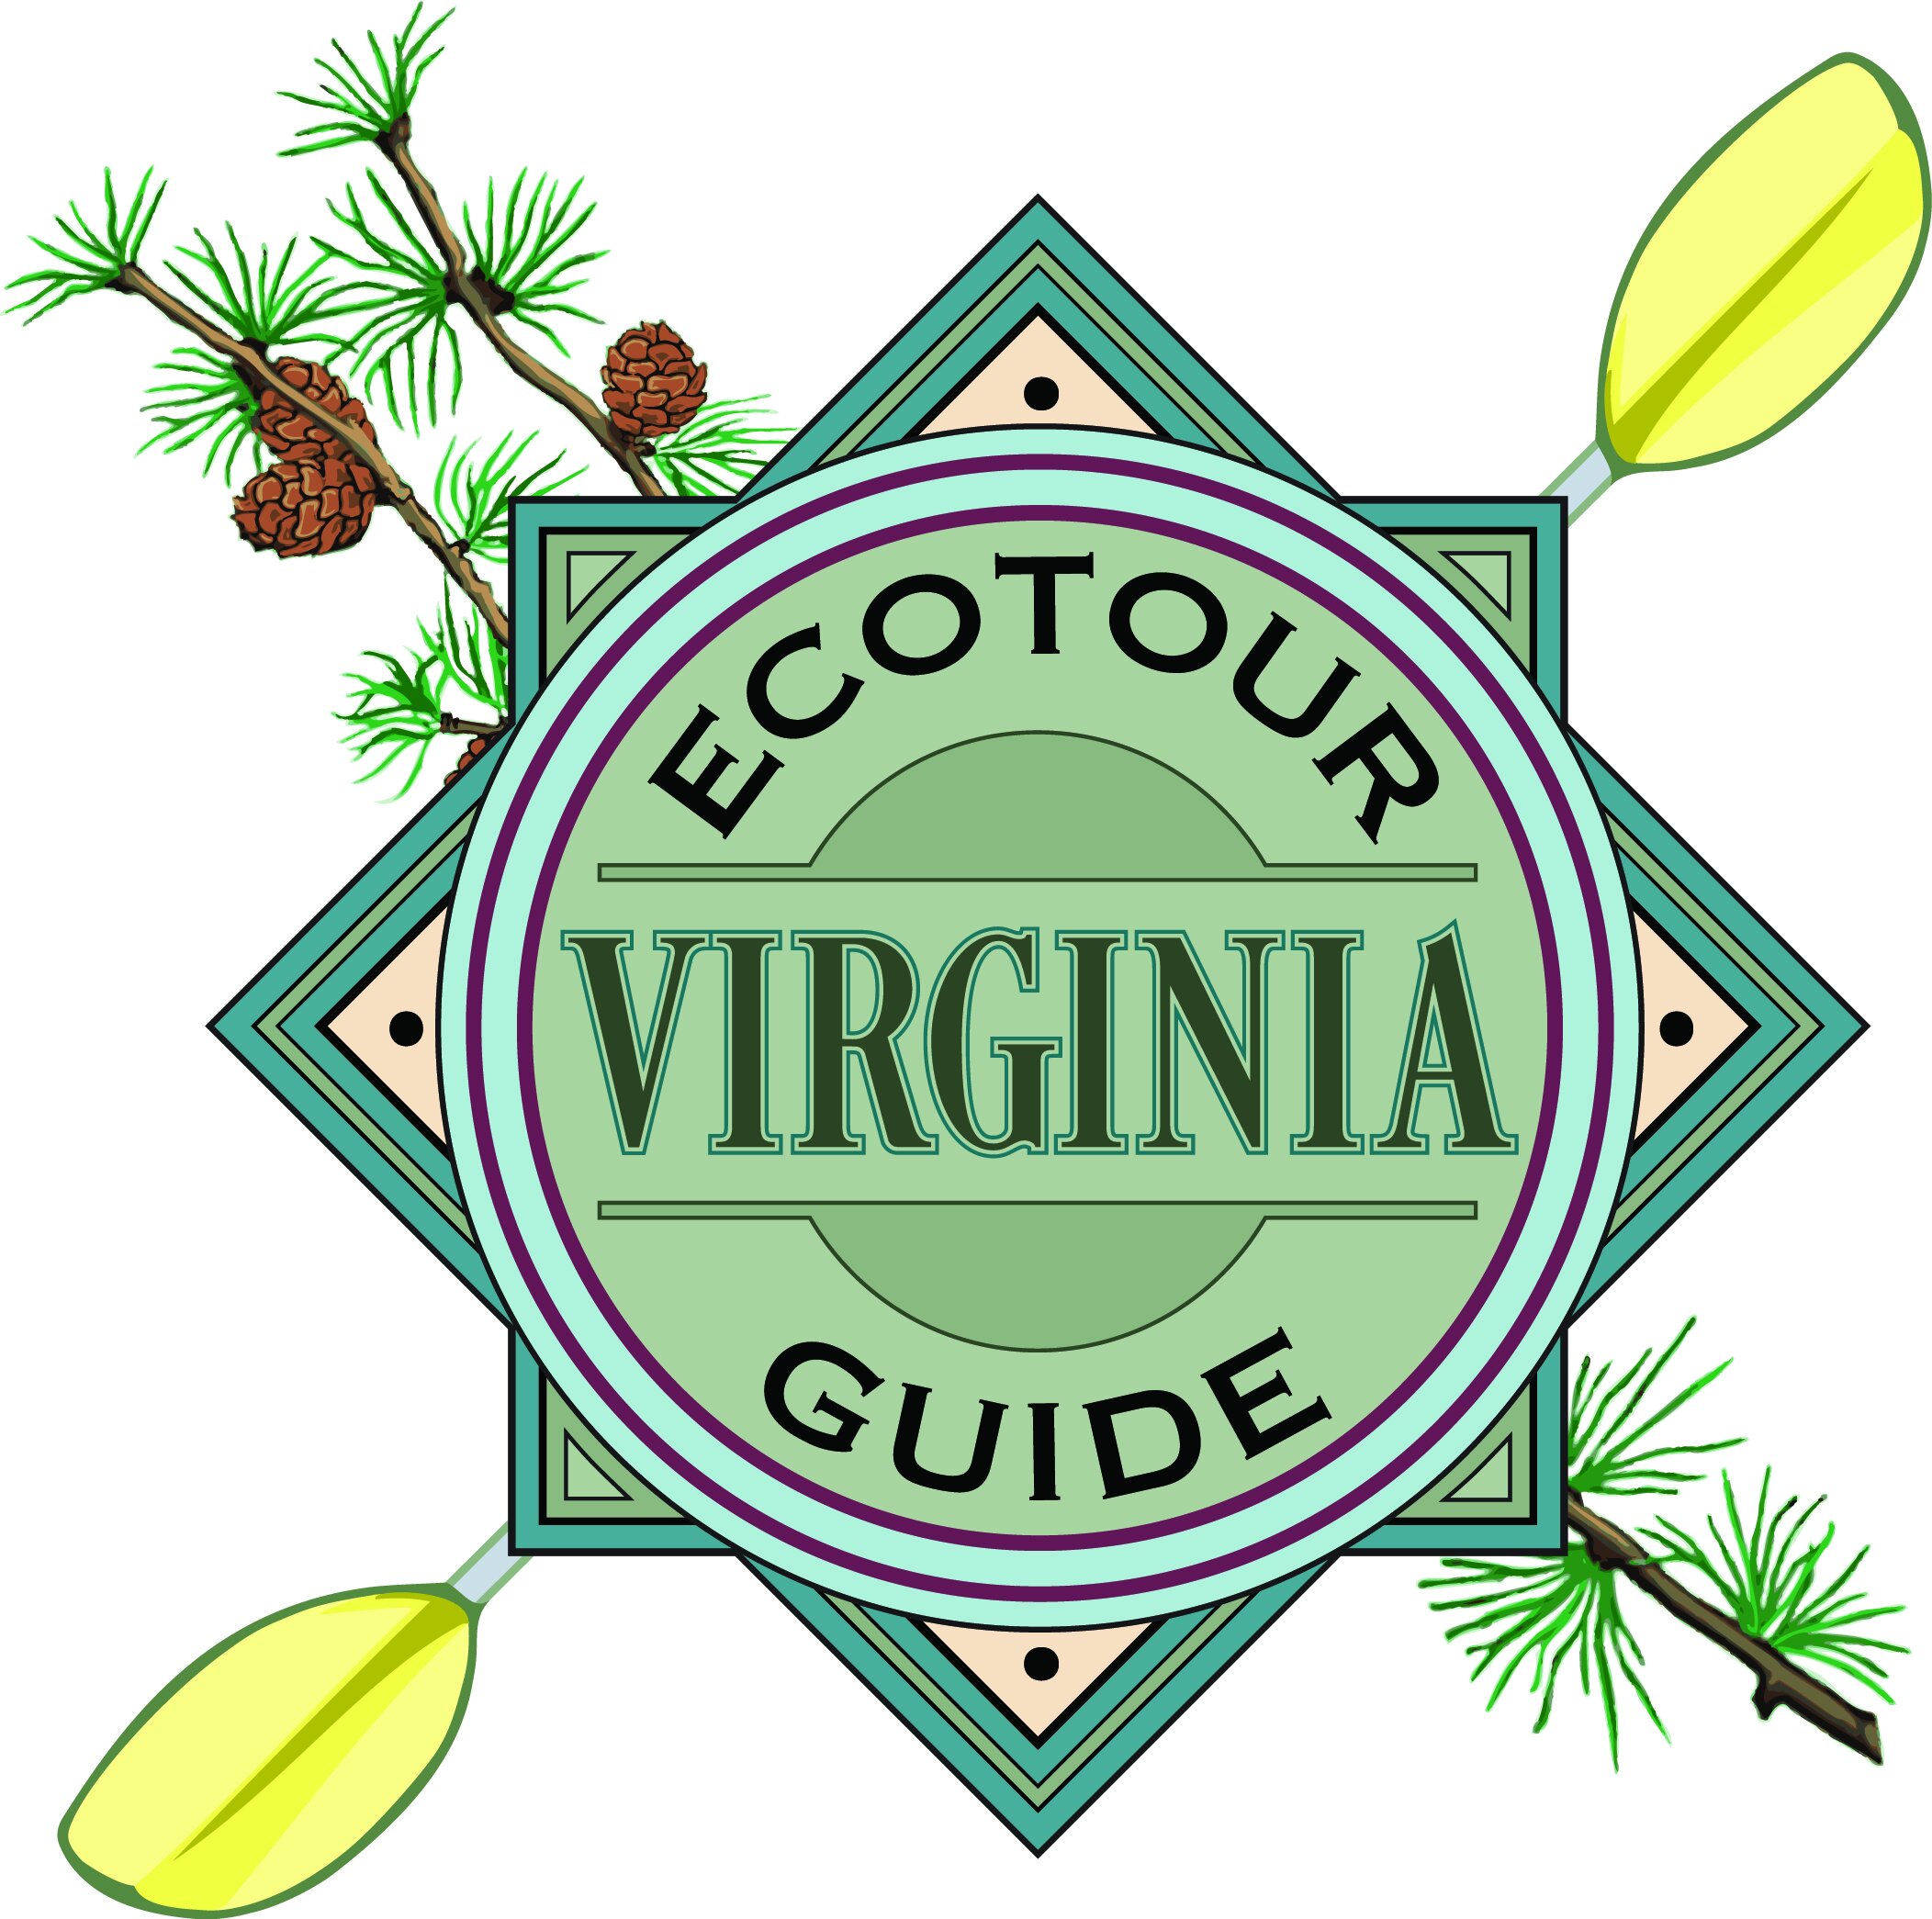 VaEcotour Guide Logo high res.jpg